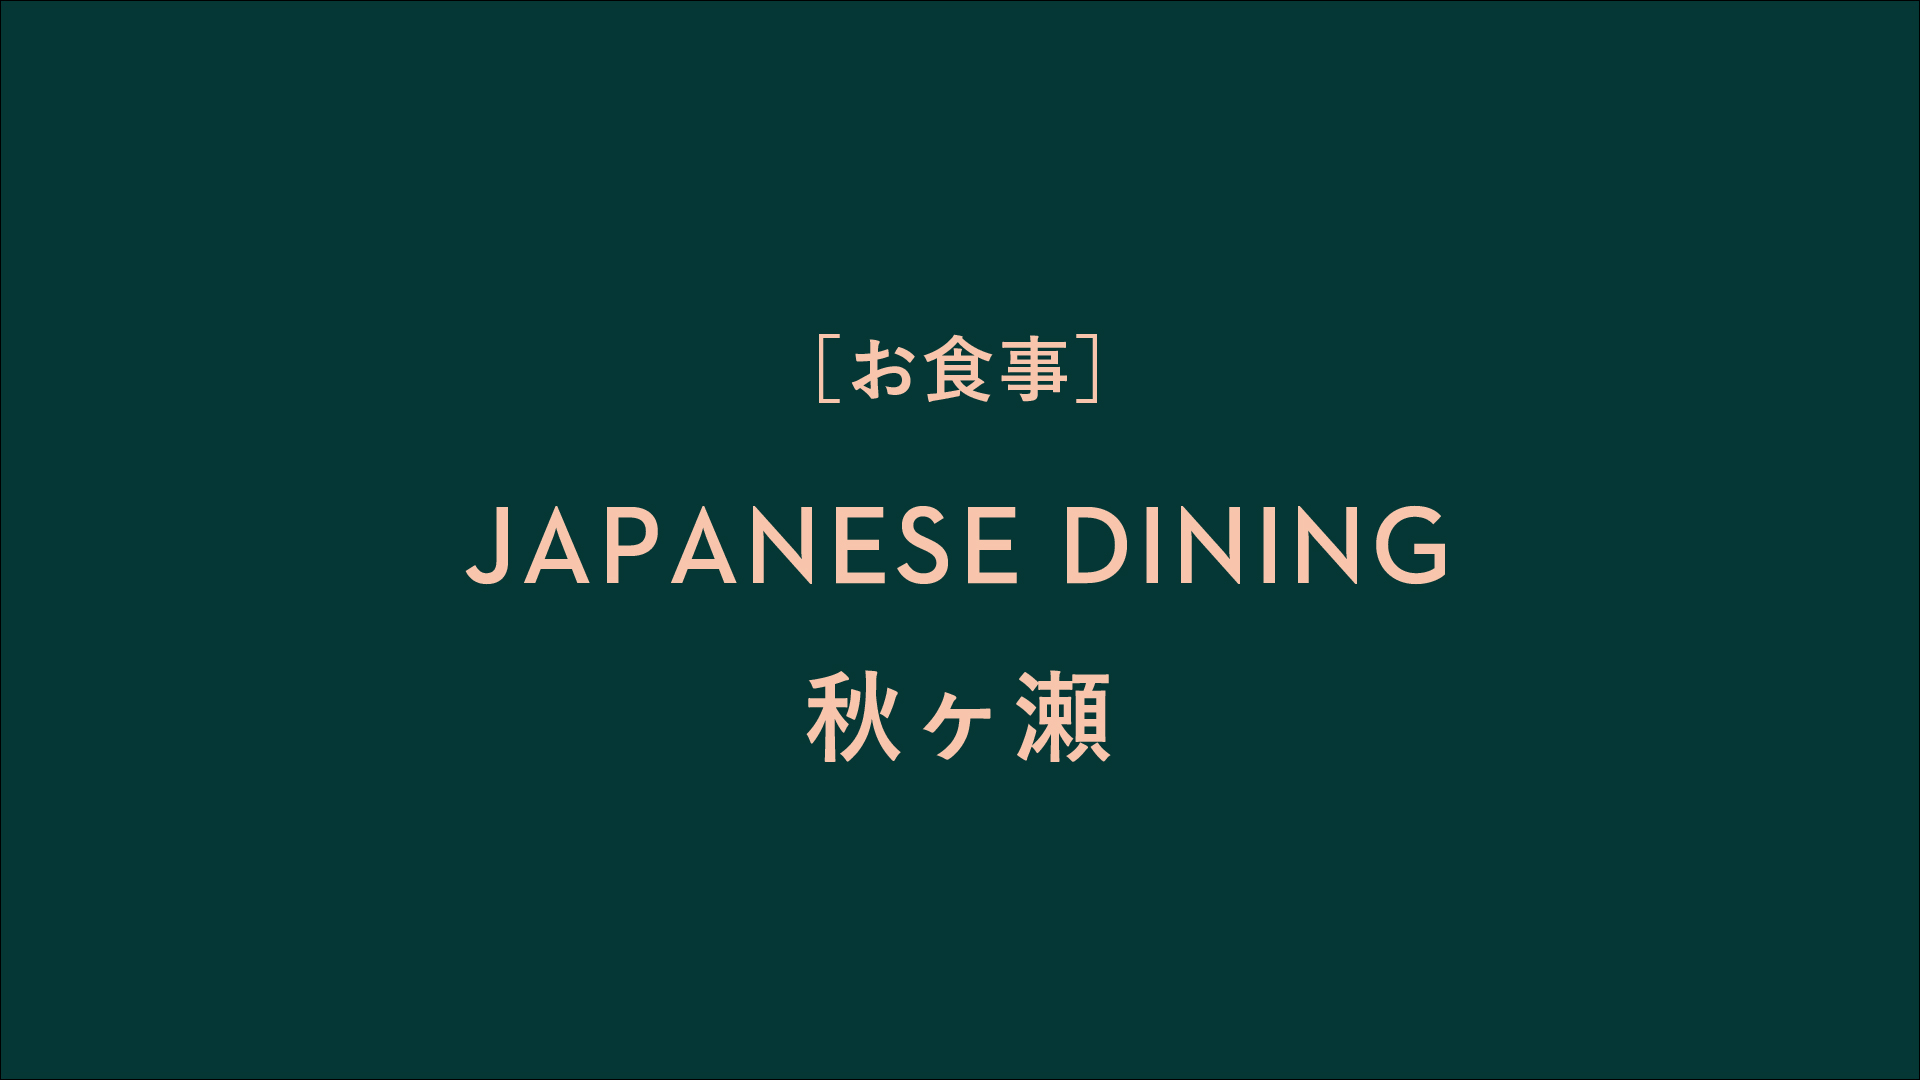 JAPANESE DINING秋ヶ瀬